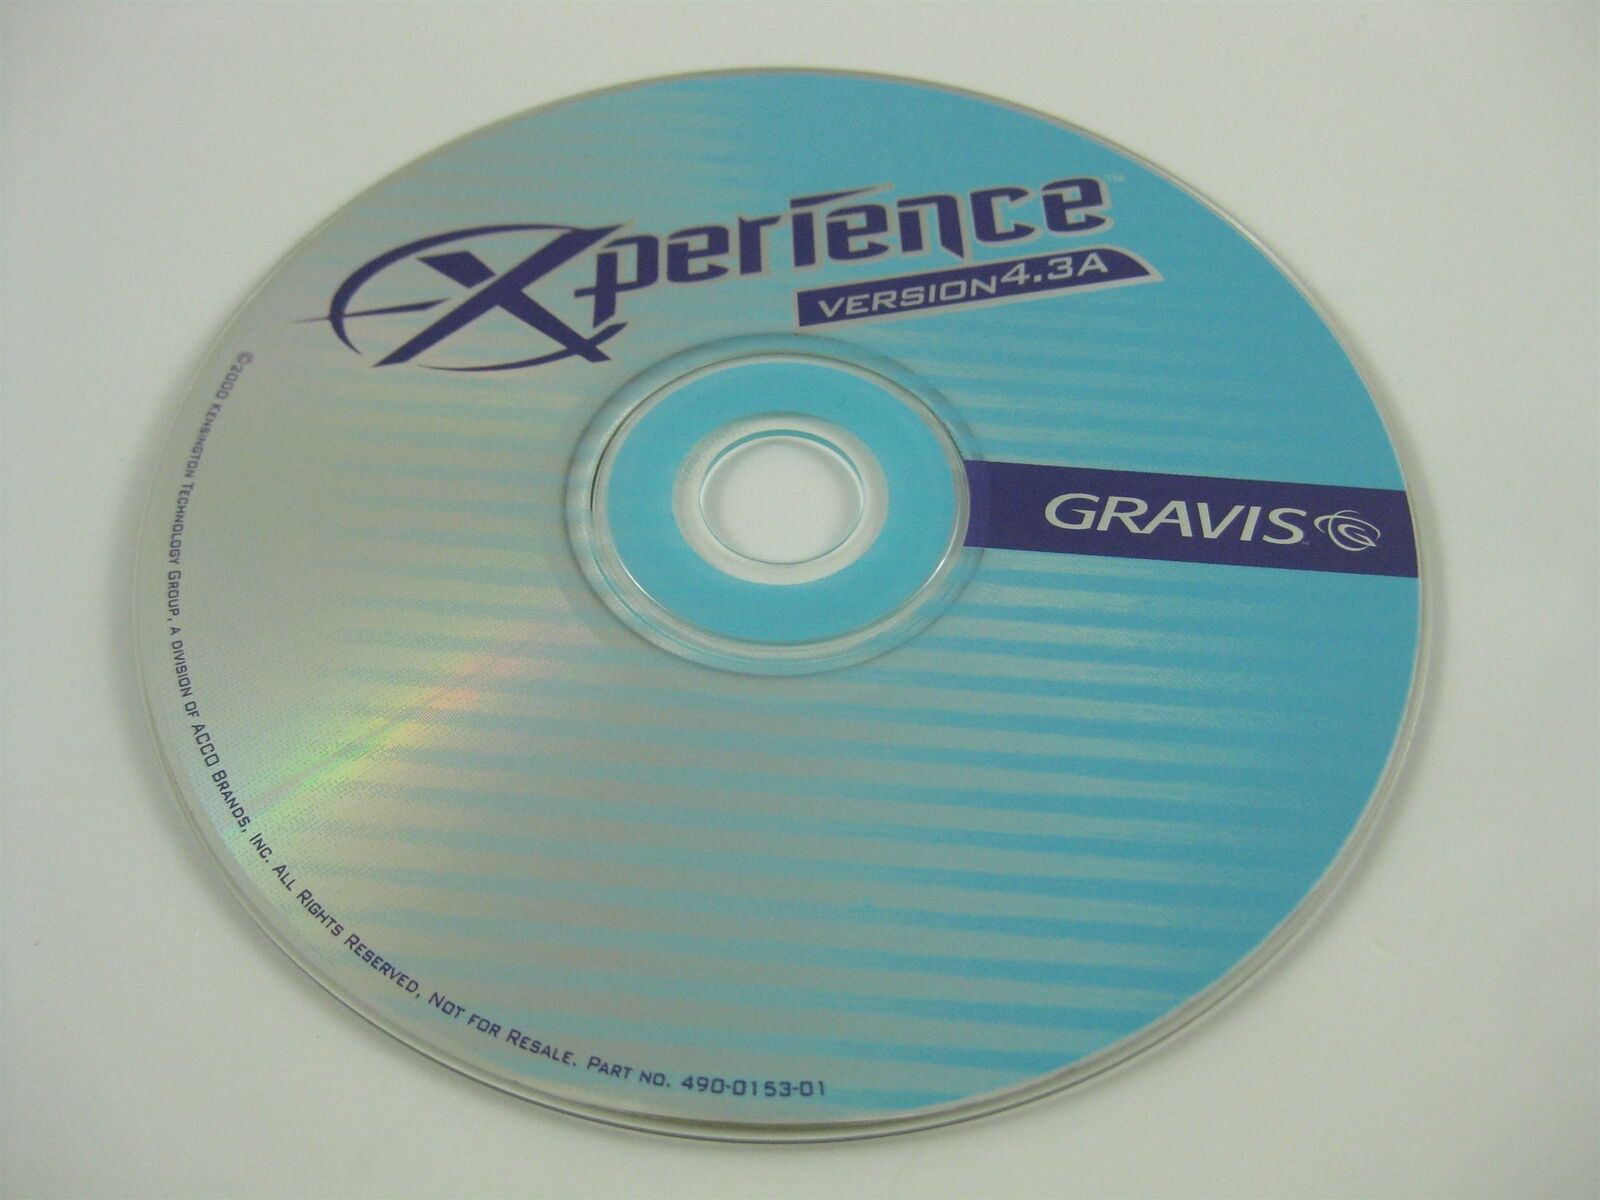 Gravis Experience 4.3a Gamepad Joystick Controller Configuration Driver CD 2000